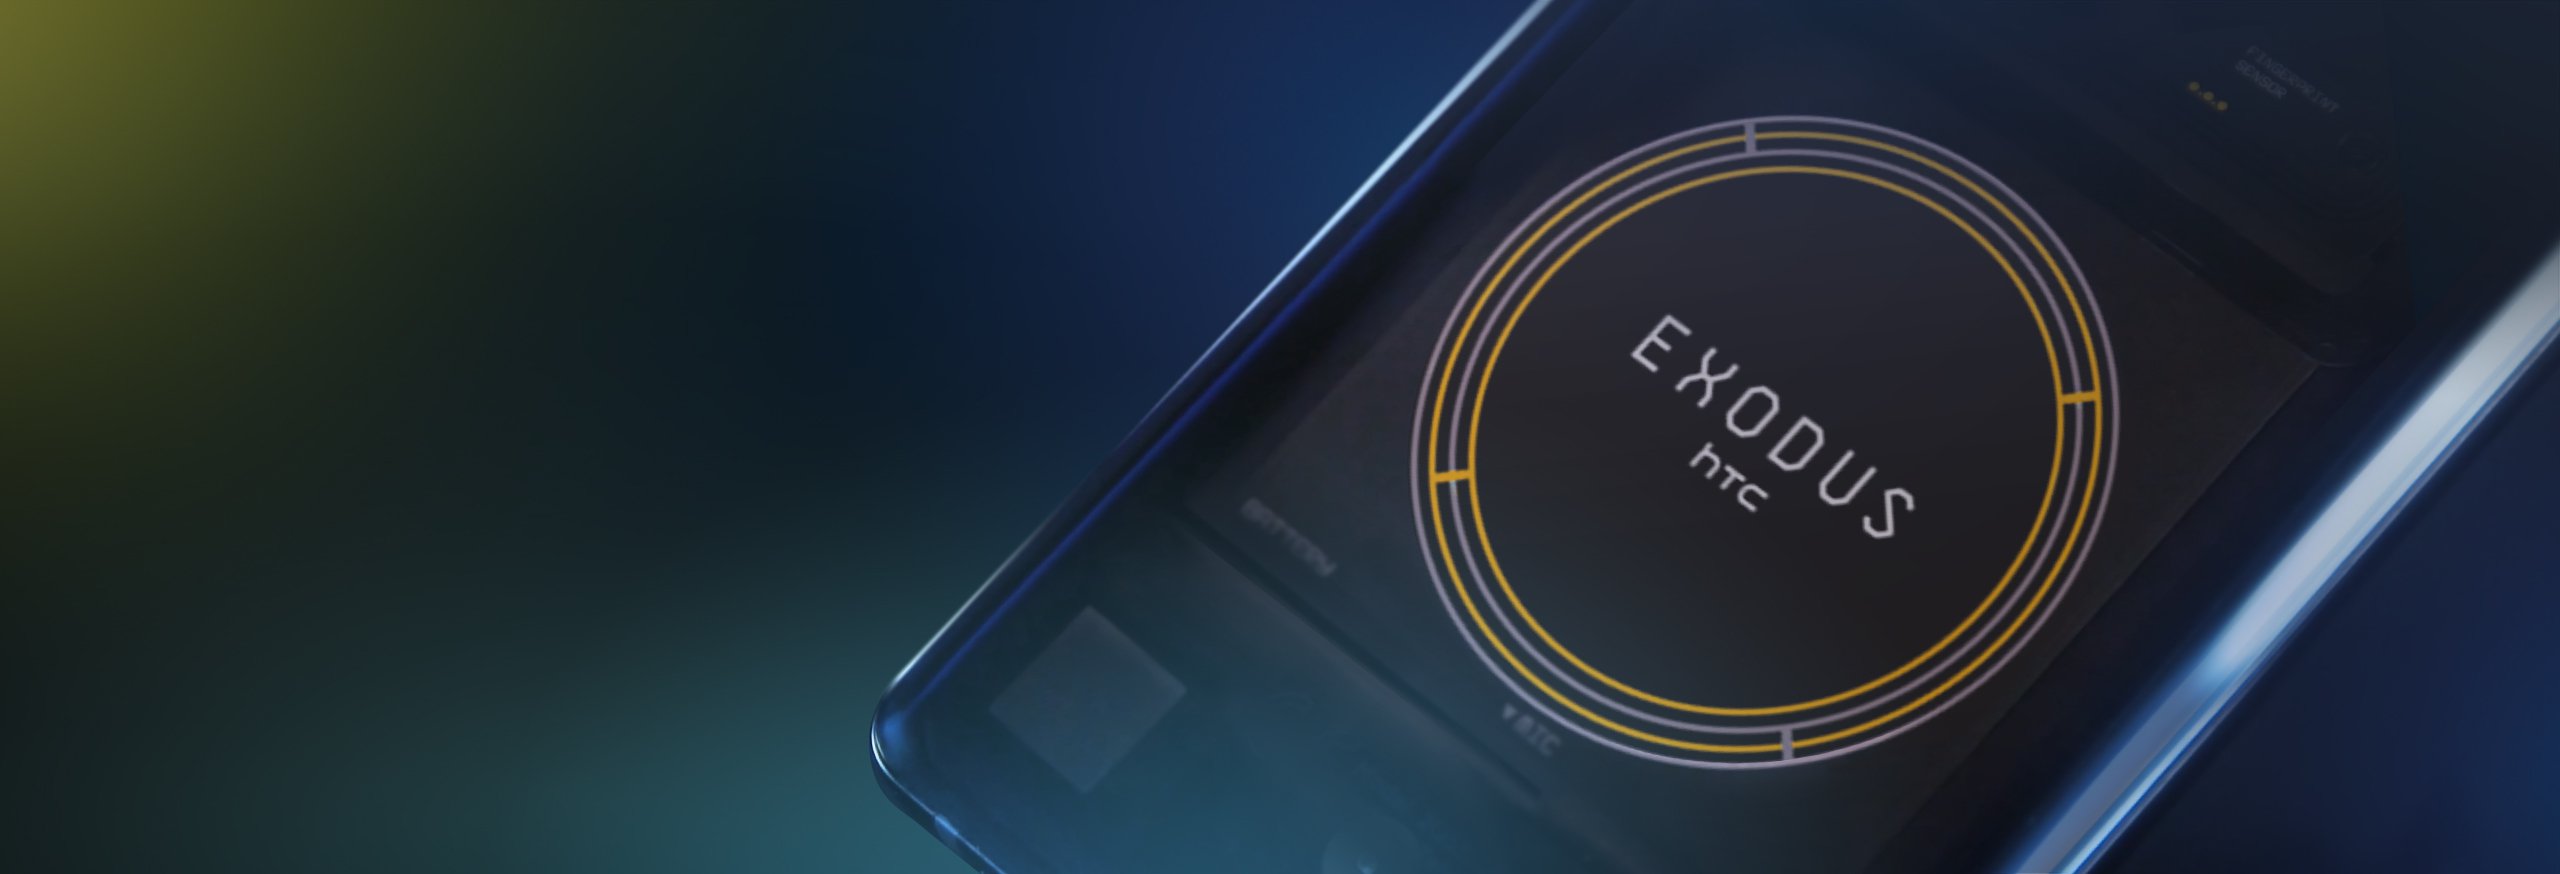 HTC Will Start Shipping The ‘Exodus’ Blockchain Phone In December